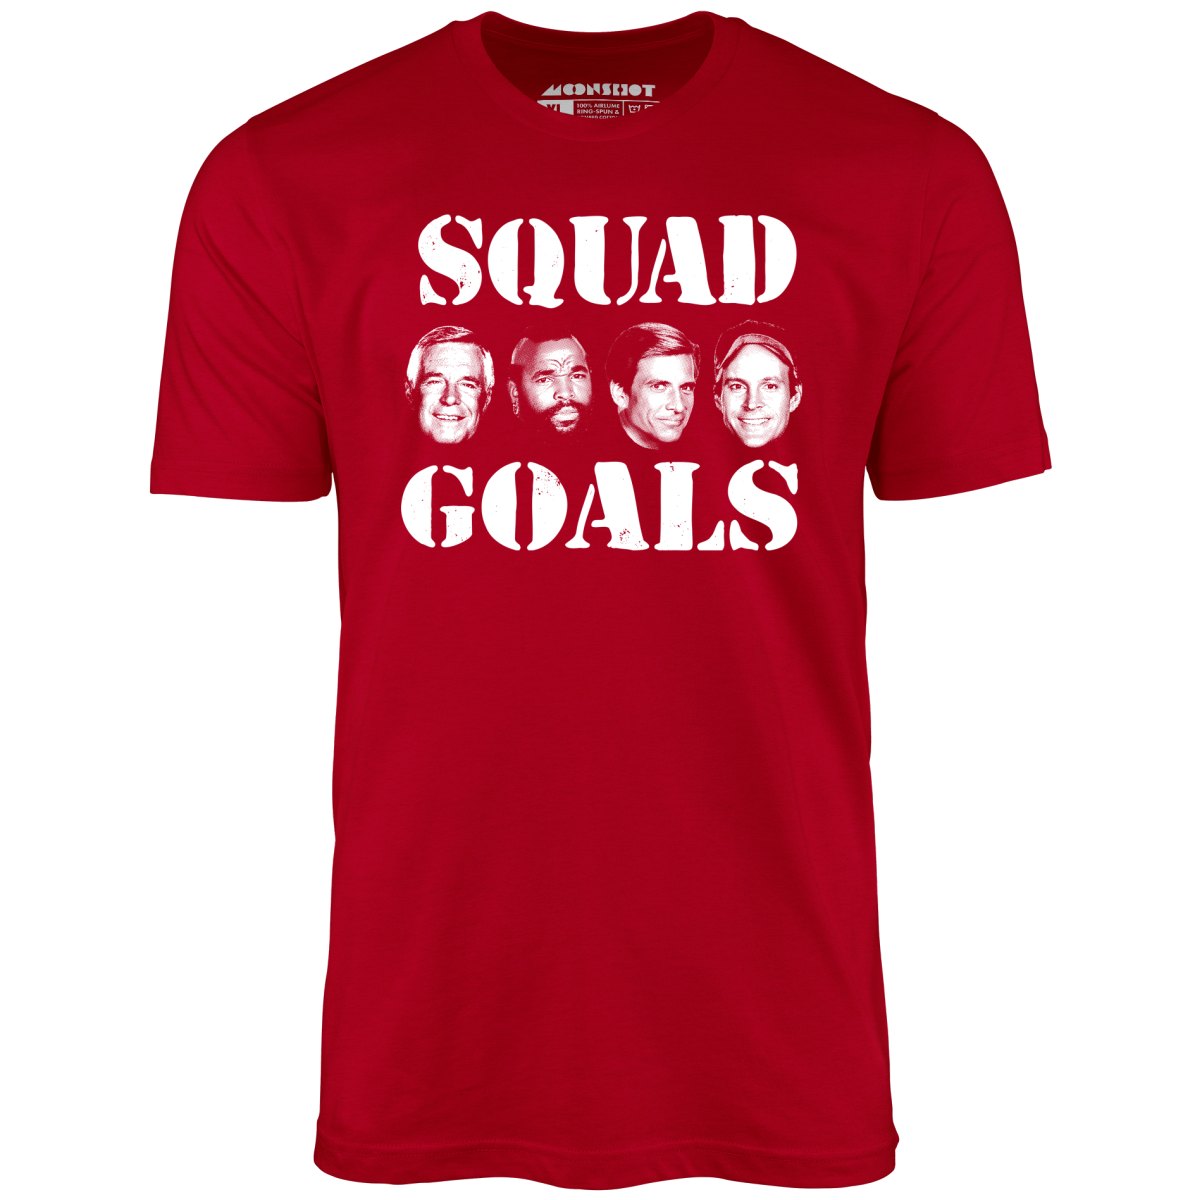 Squad Goals - A-Team - Unisex T-Shirt